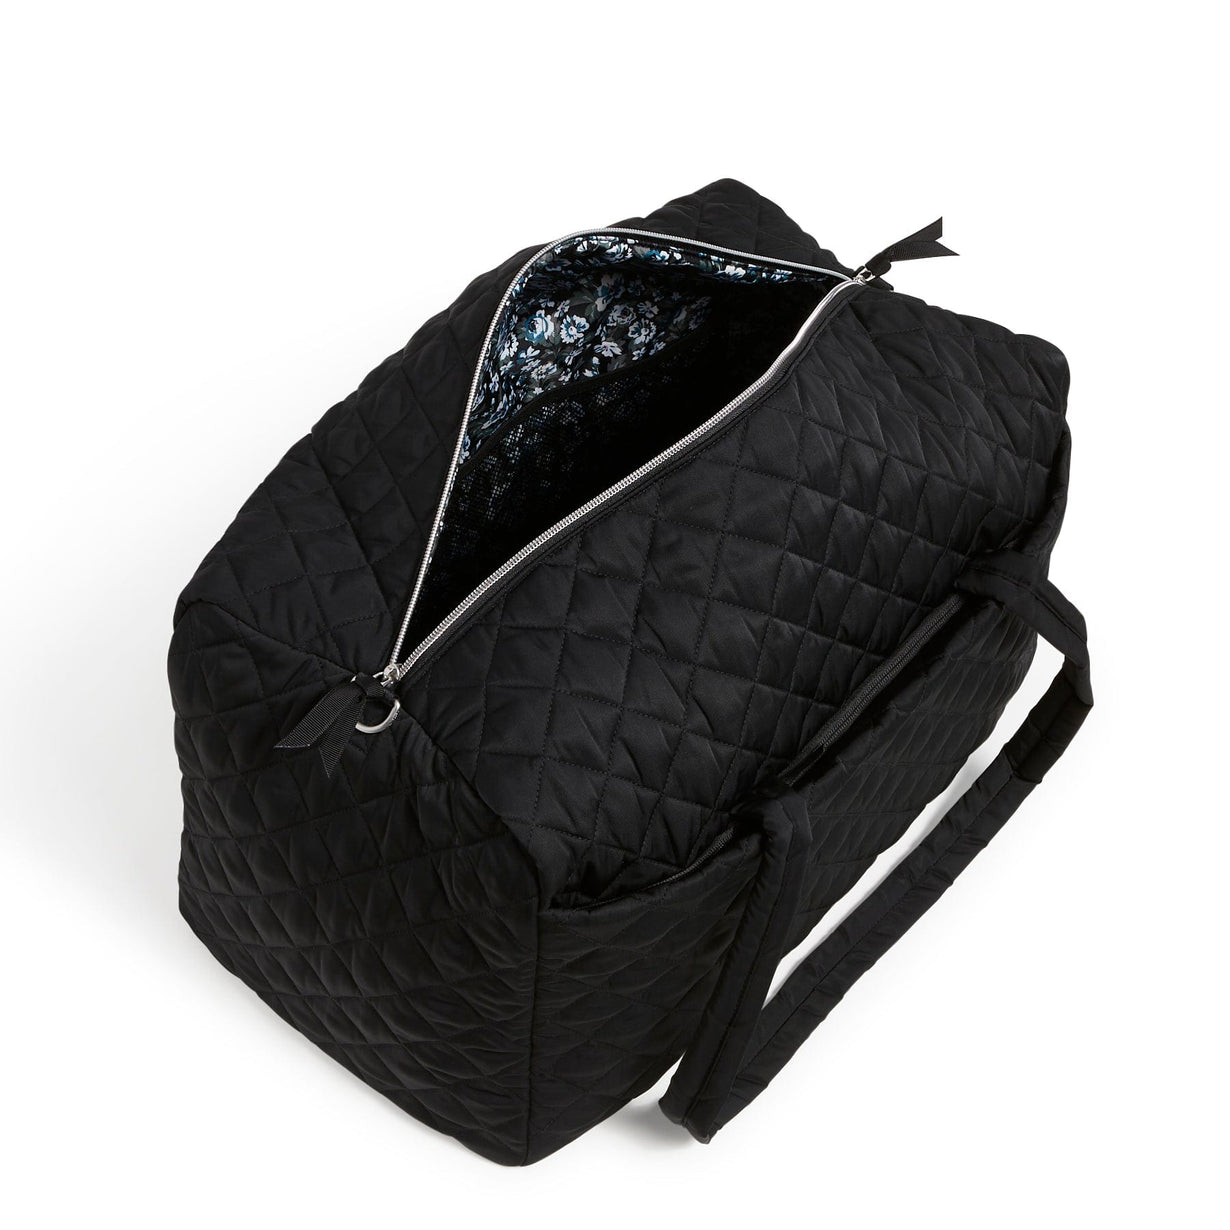 Black Large Travel Duffel Bag | Vera Bradley